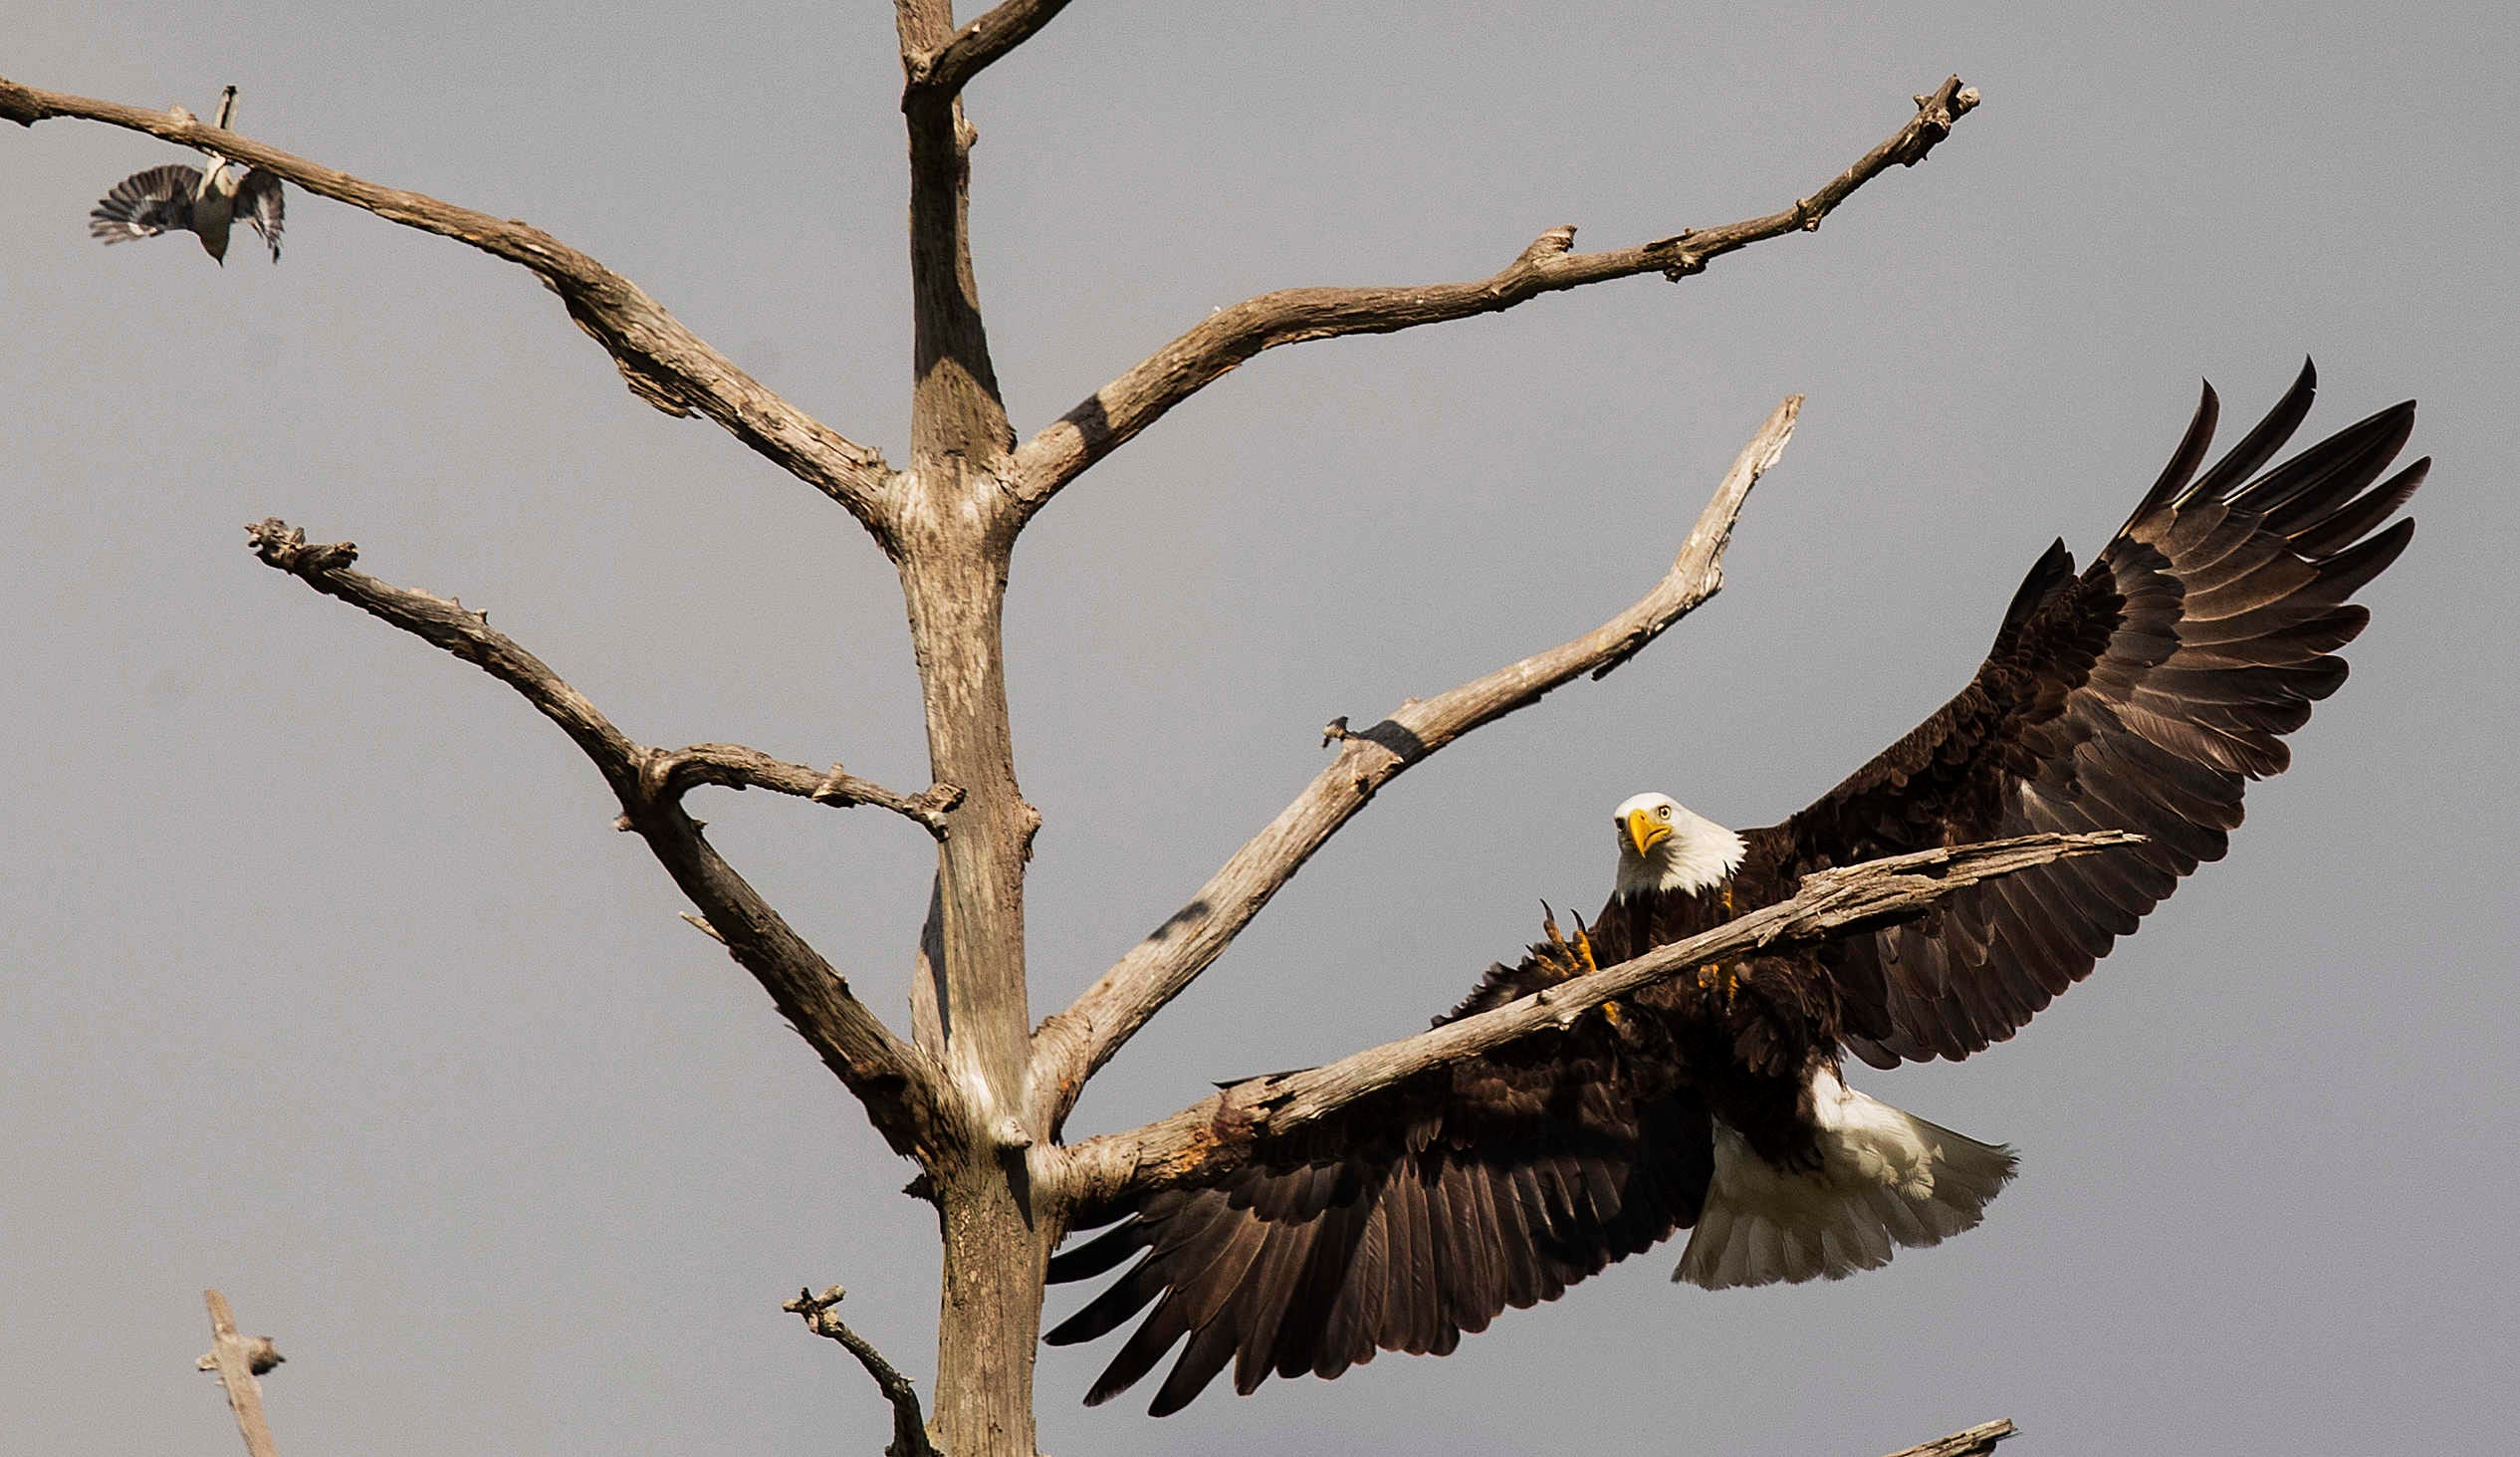 Resultado de imagem para the eaglets were fighting over food